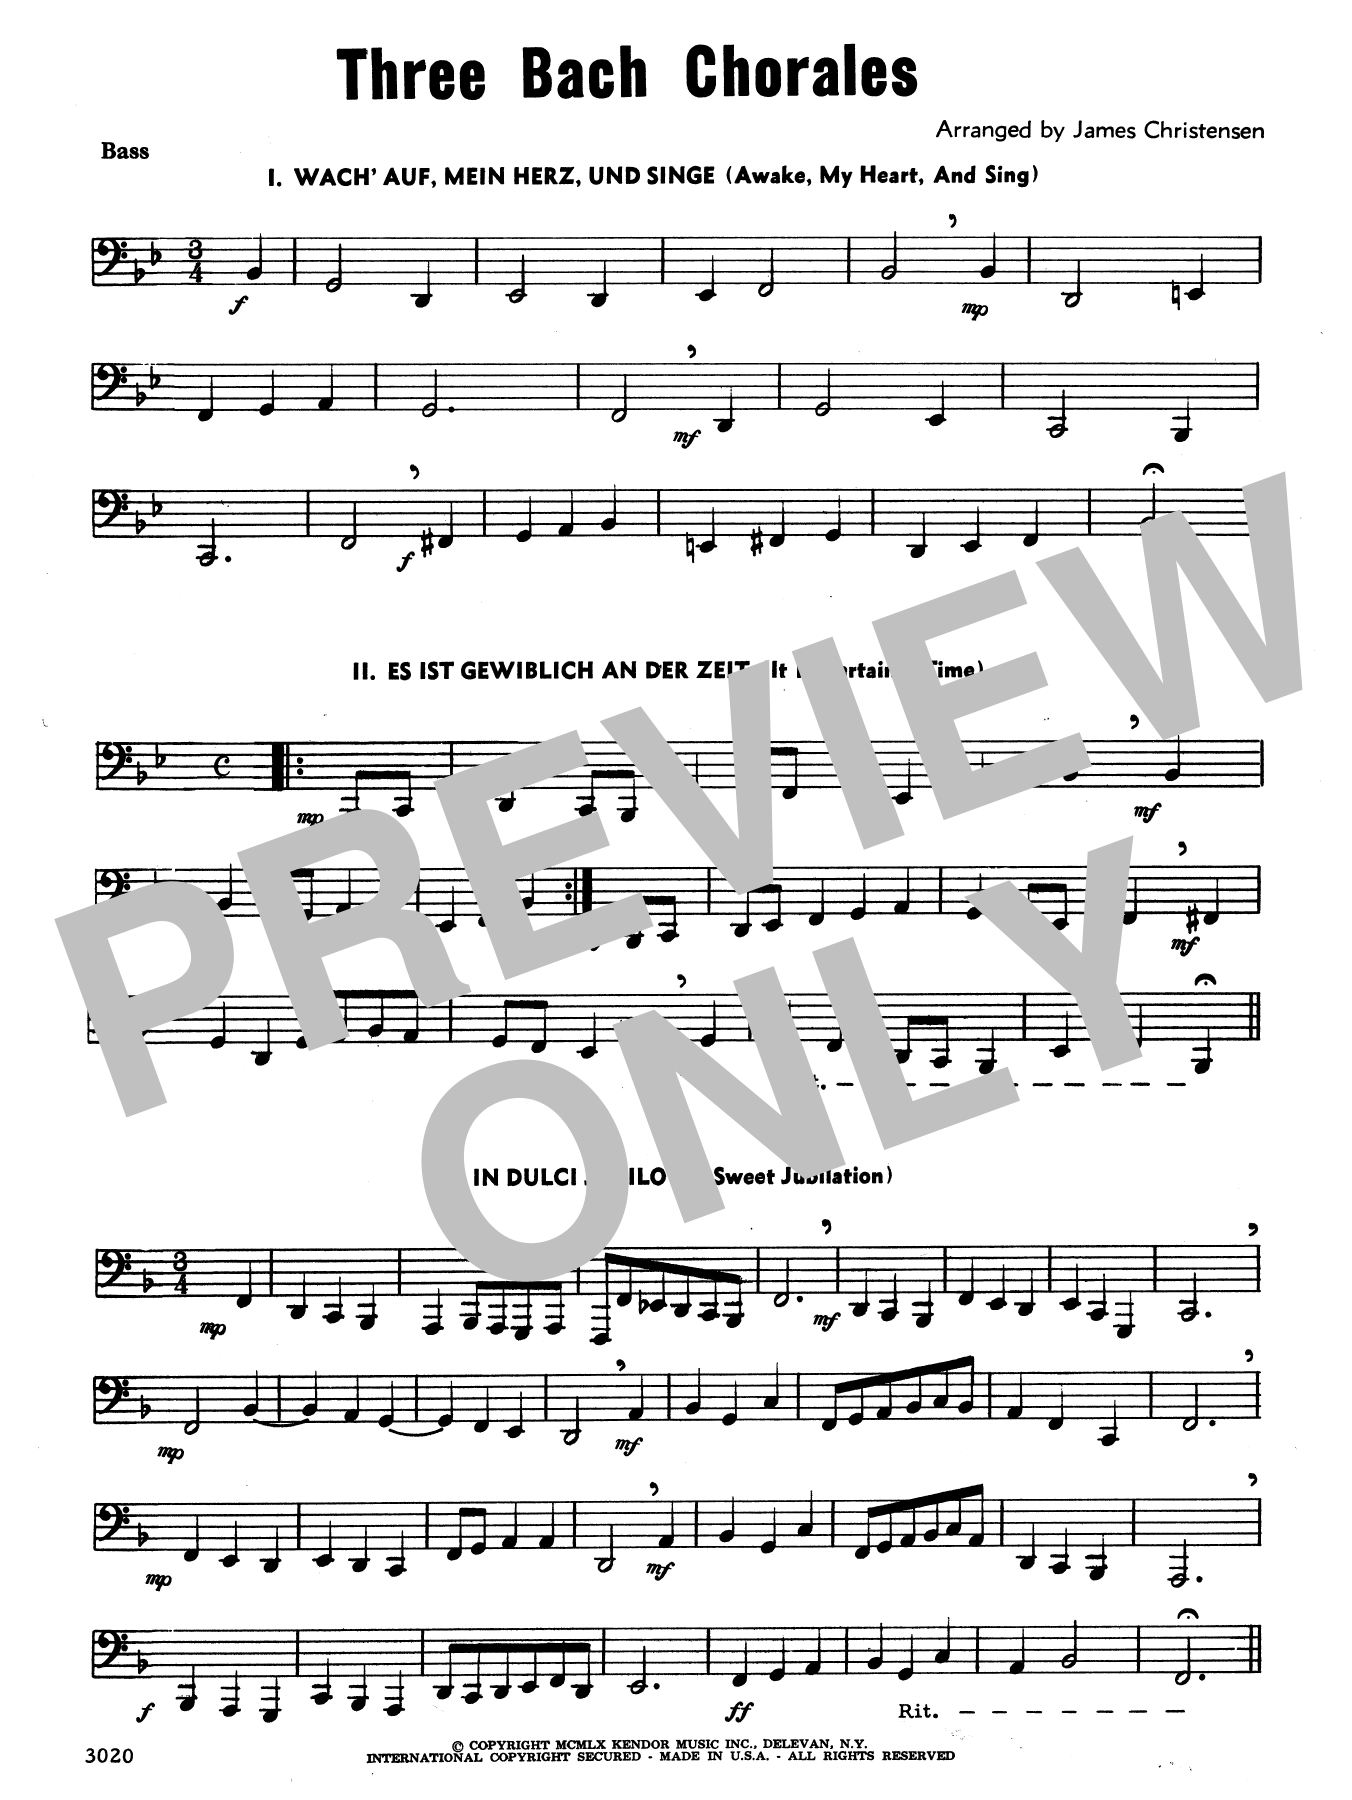 Download James Christensen Three Bach Chorales - Bass Sheet Music